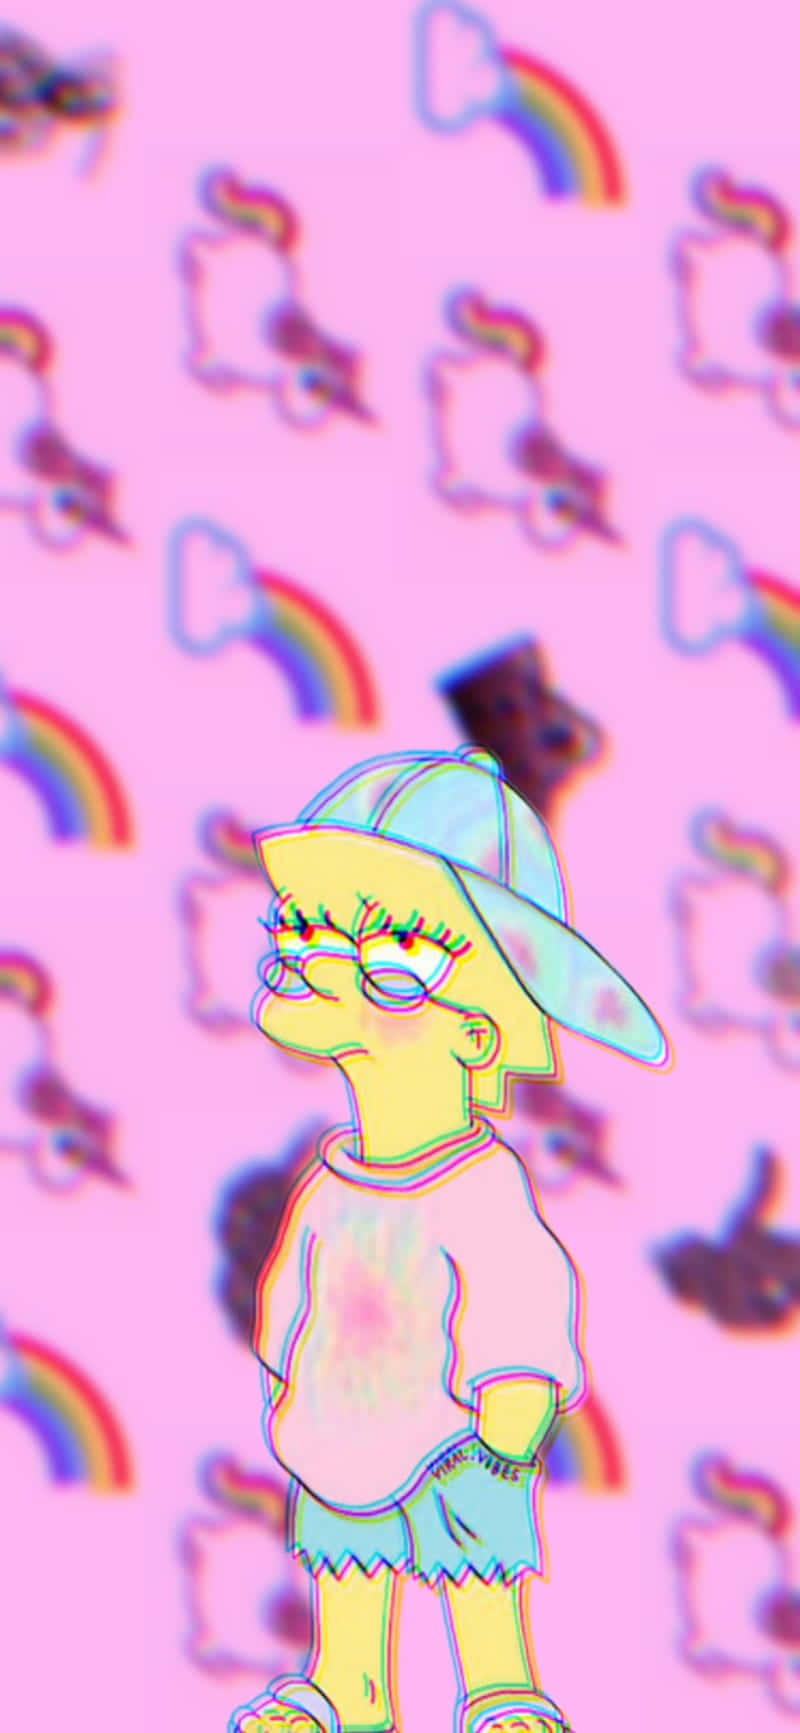 Sad Lisa Simpson With Rainbow Patterns Wallpaper